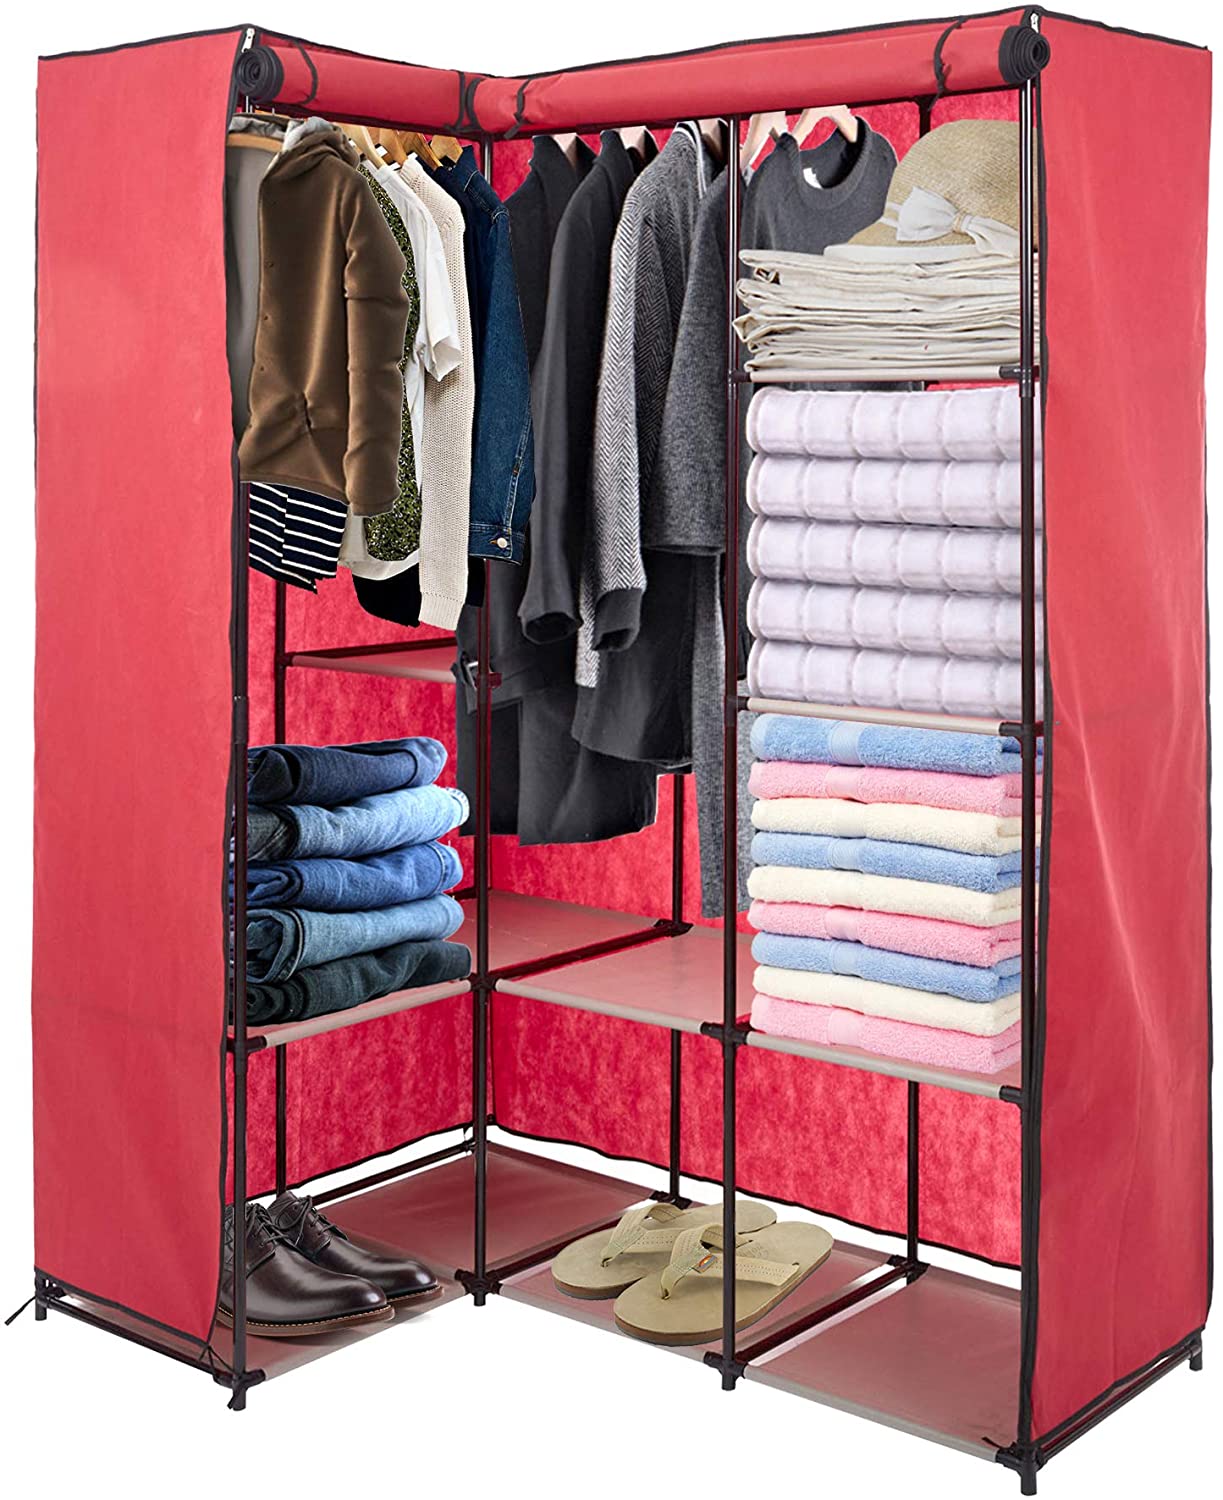 Portable Wardrobe Closets Organizer Cloth Closet Shelves L-Shape Non-Woven Fabric Cover Space-Saving Clothes Organizer Perfect for Bedroom Corner, Red